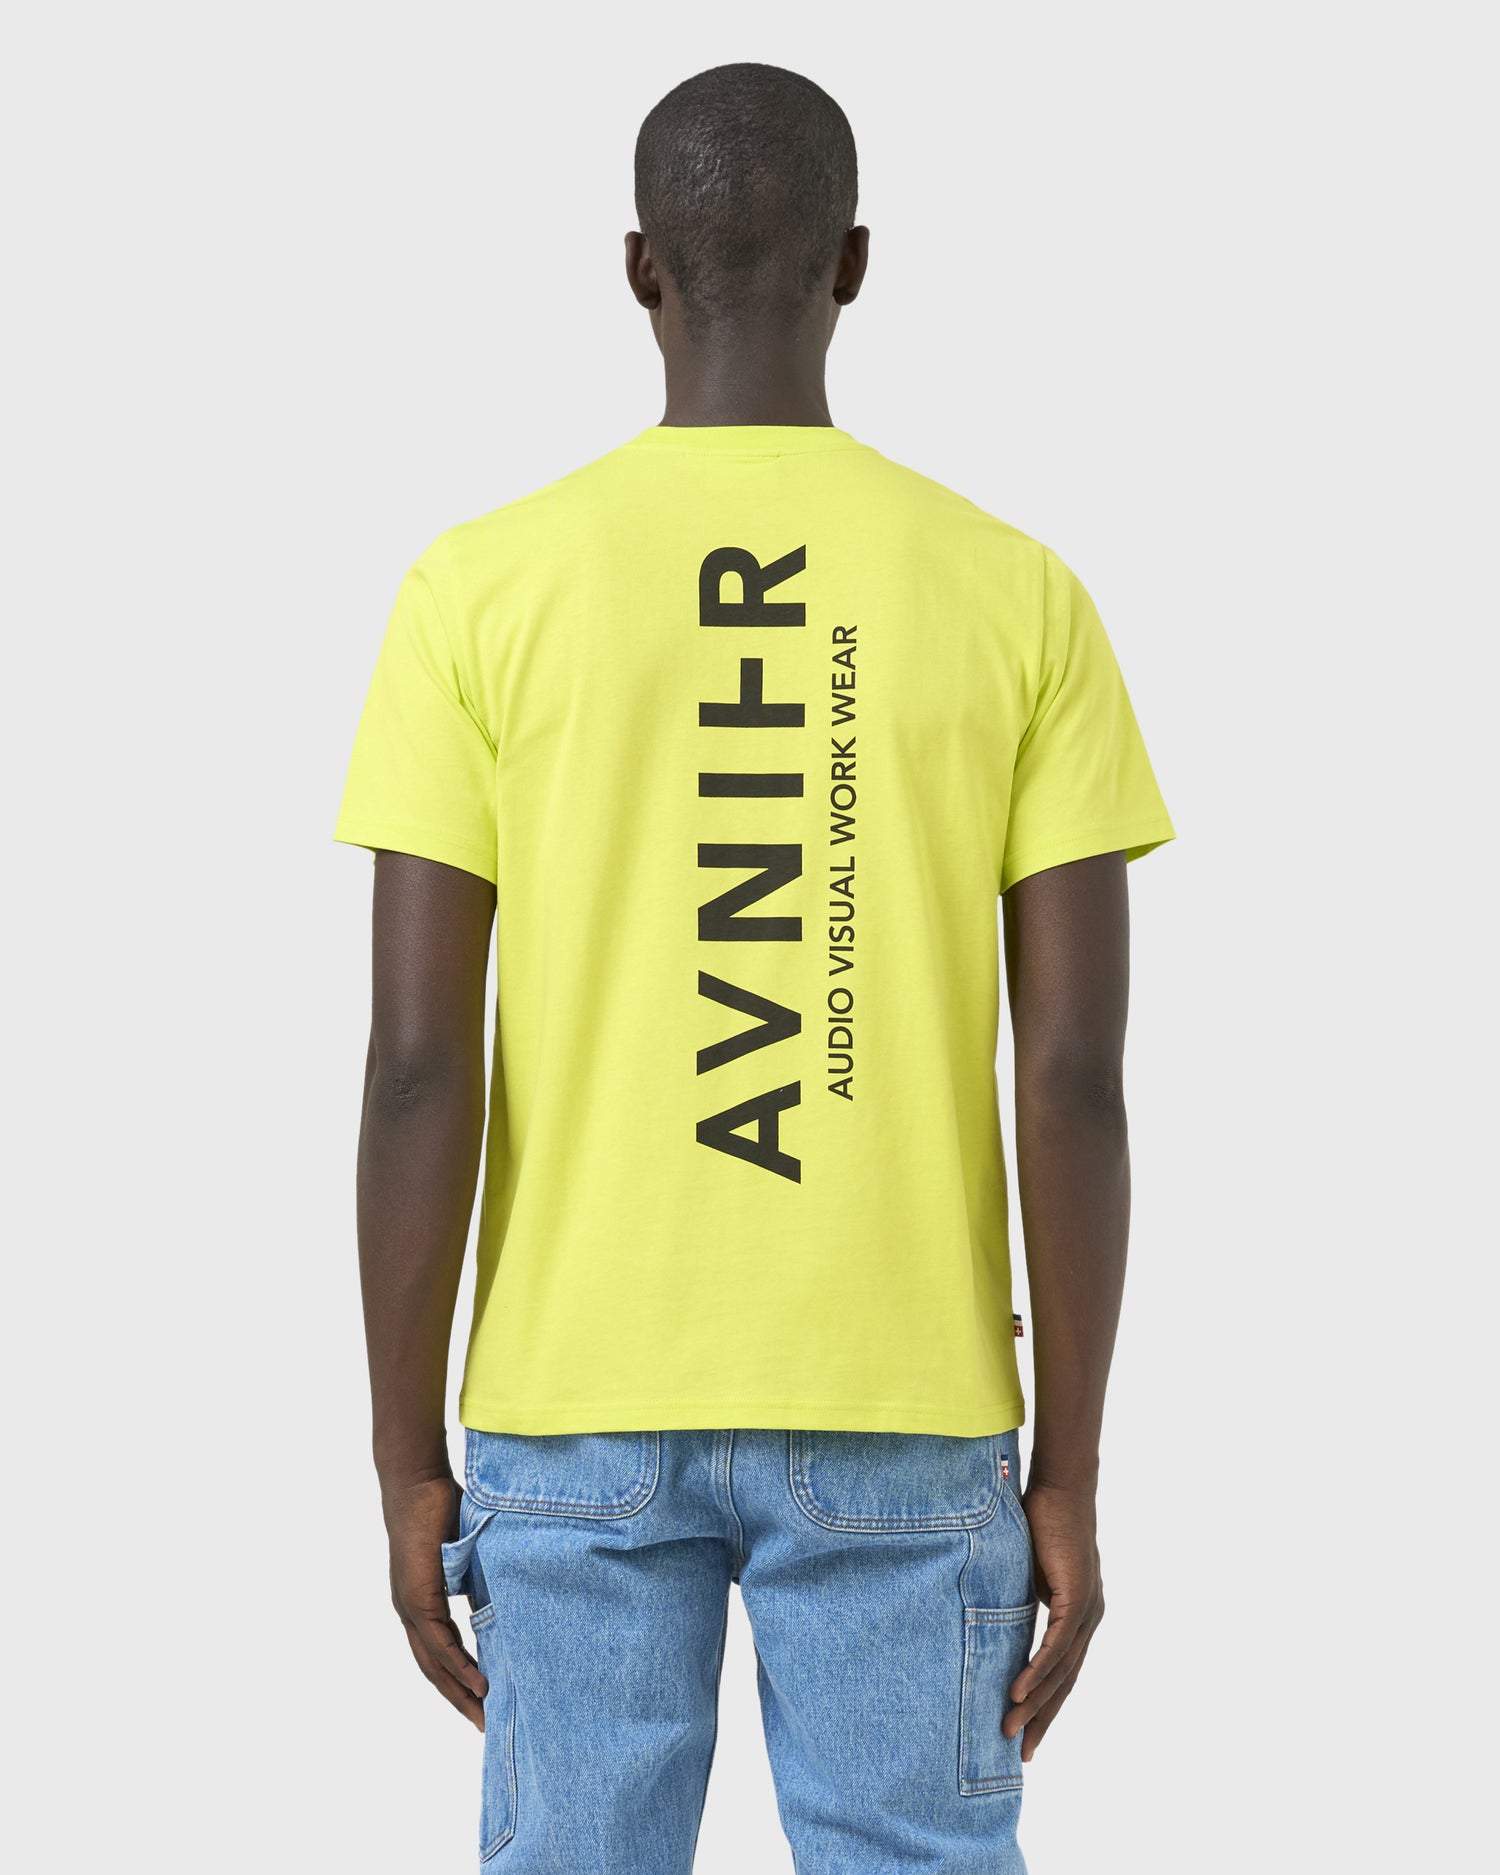 t-shirt-source-vertical-jaune-avnier-tournage-3-silhouette-dos - Jaune signalisation